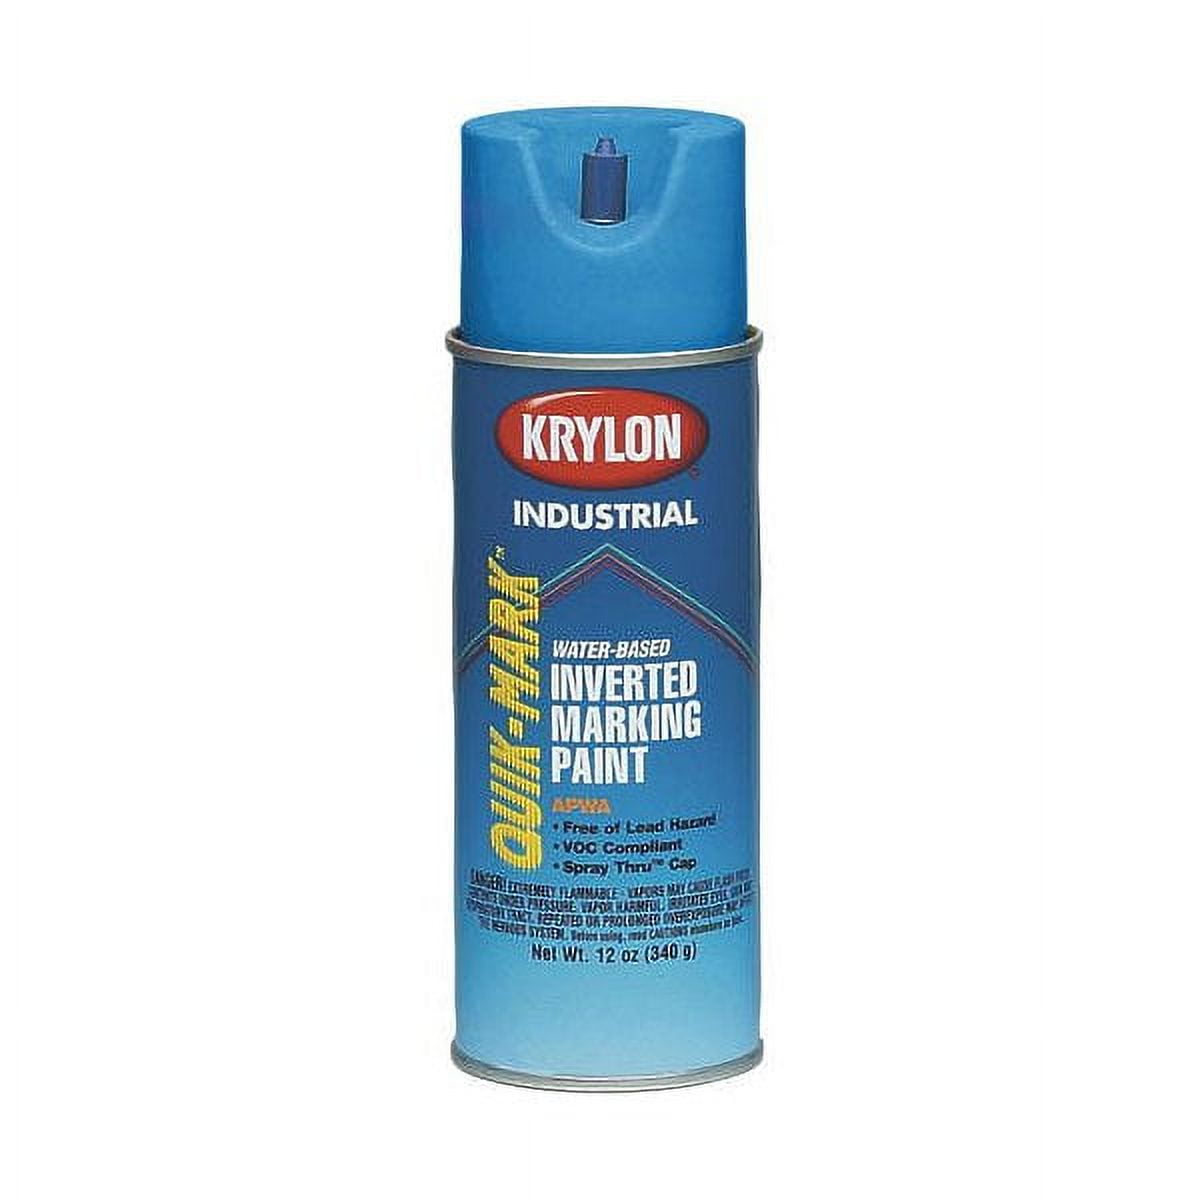 Pintyplus Aqua Spray Paint - Art Set of 8 Water Based 4.2oz Mini Spray  Paint Cans. Ultra Matte Finish. Perfect For Arts & Crafts. Spray Paint Set